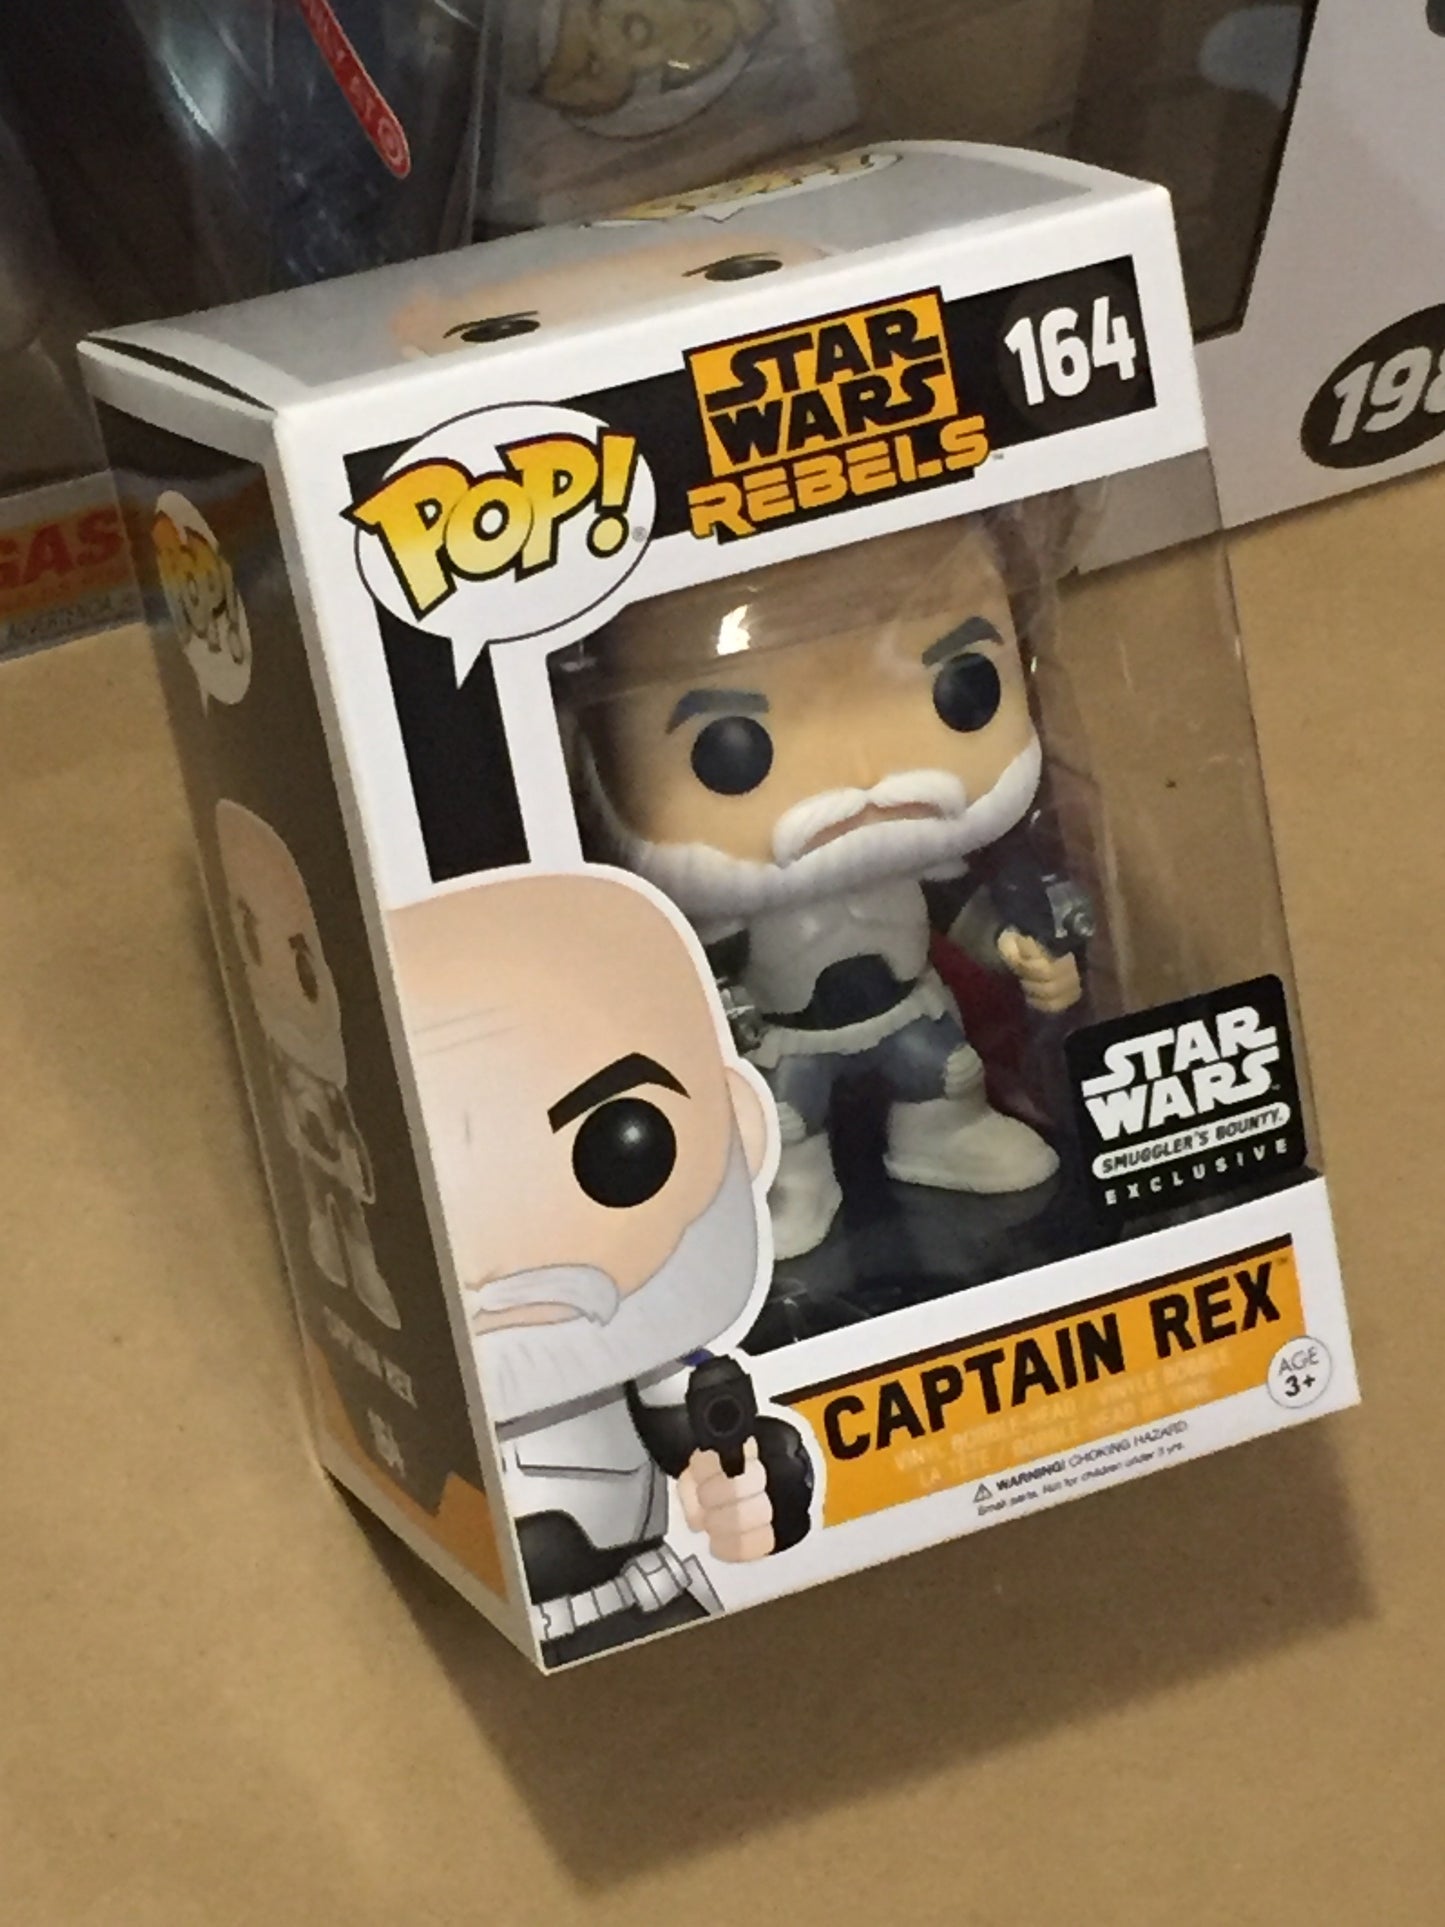 Star Wars Rebels Captain Rex Smugglers bounty Funko Pop! Vinyl figure